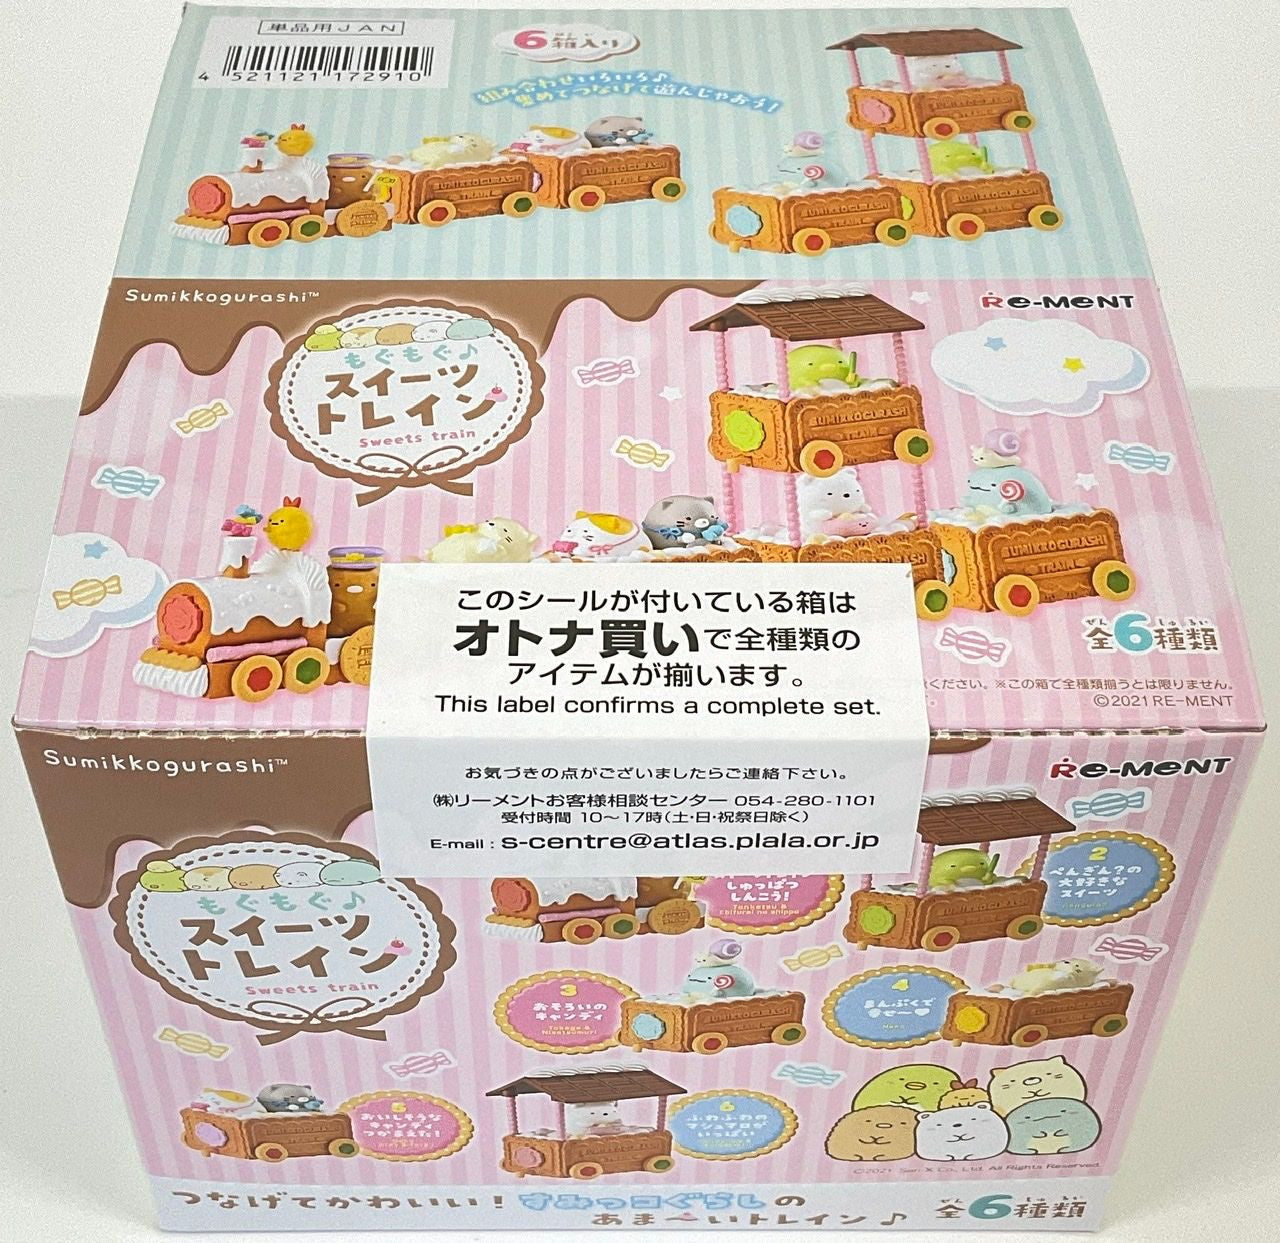 [Bundle] Sumikko Gurashi Re-Ment Sweets Train (Box Set of 6)